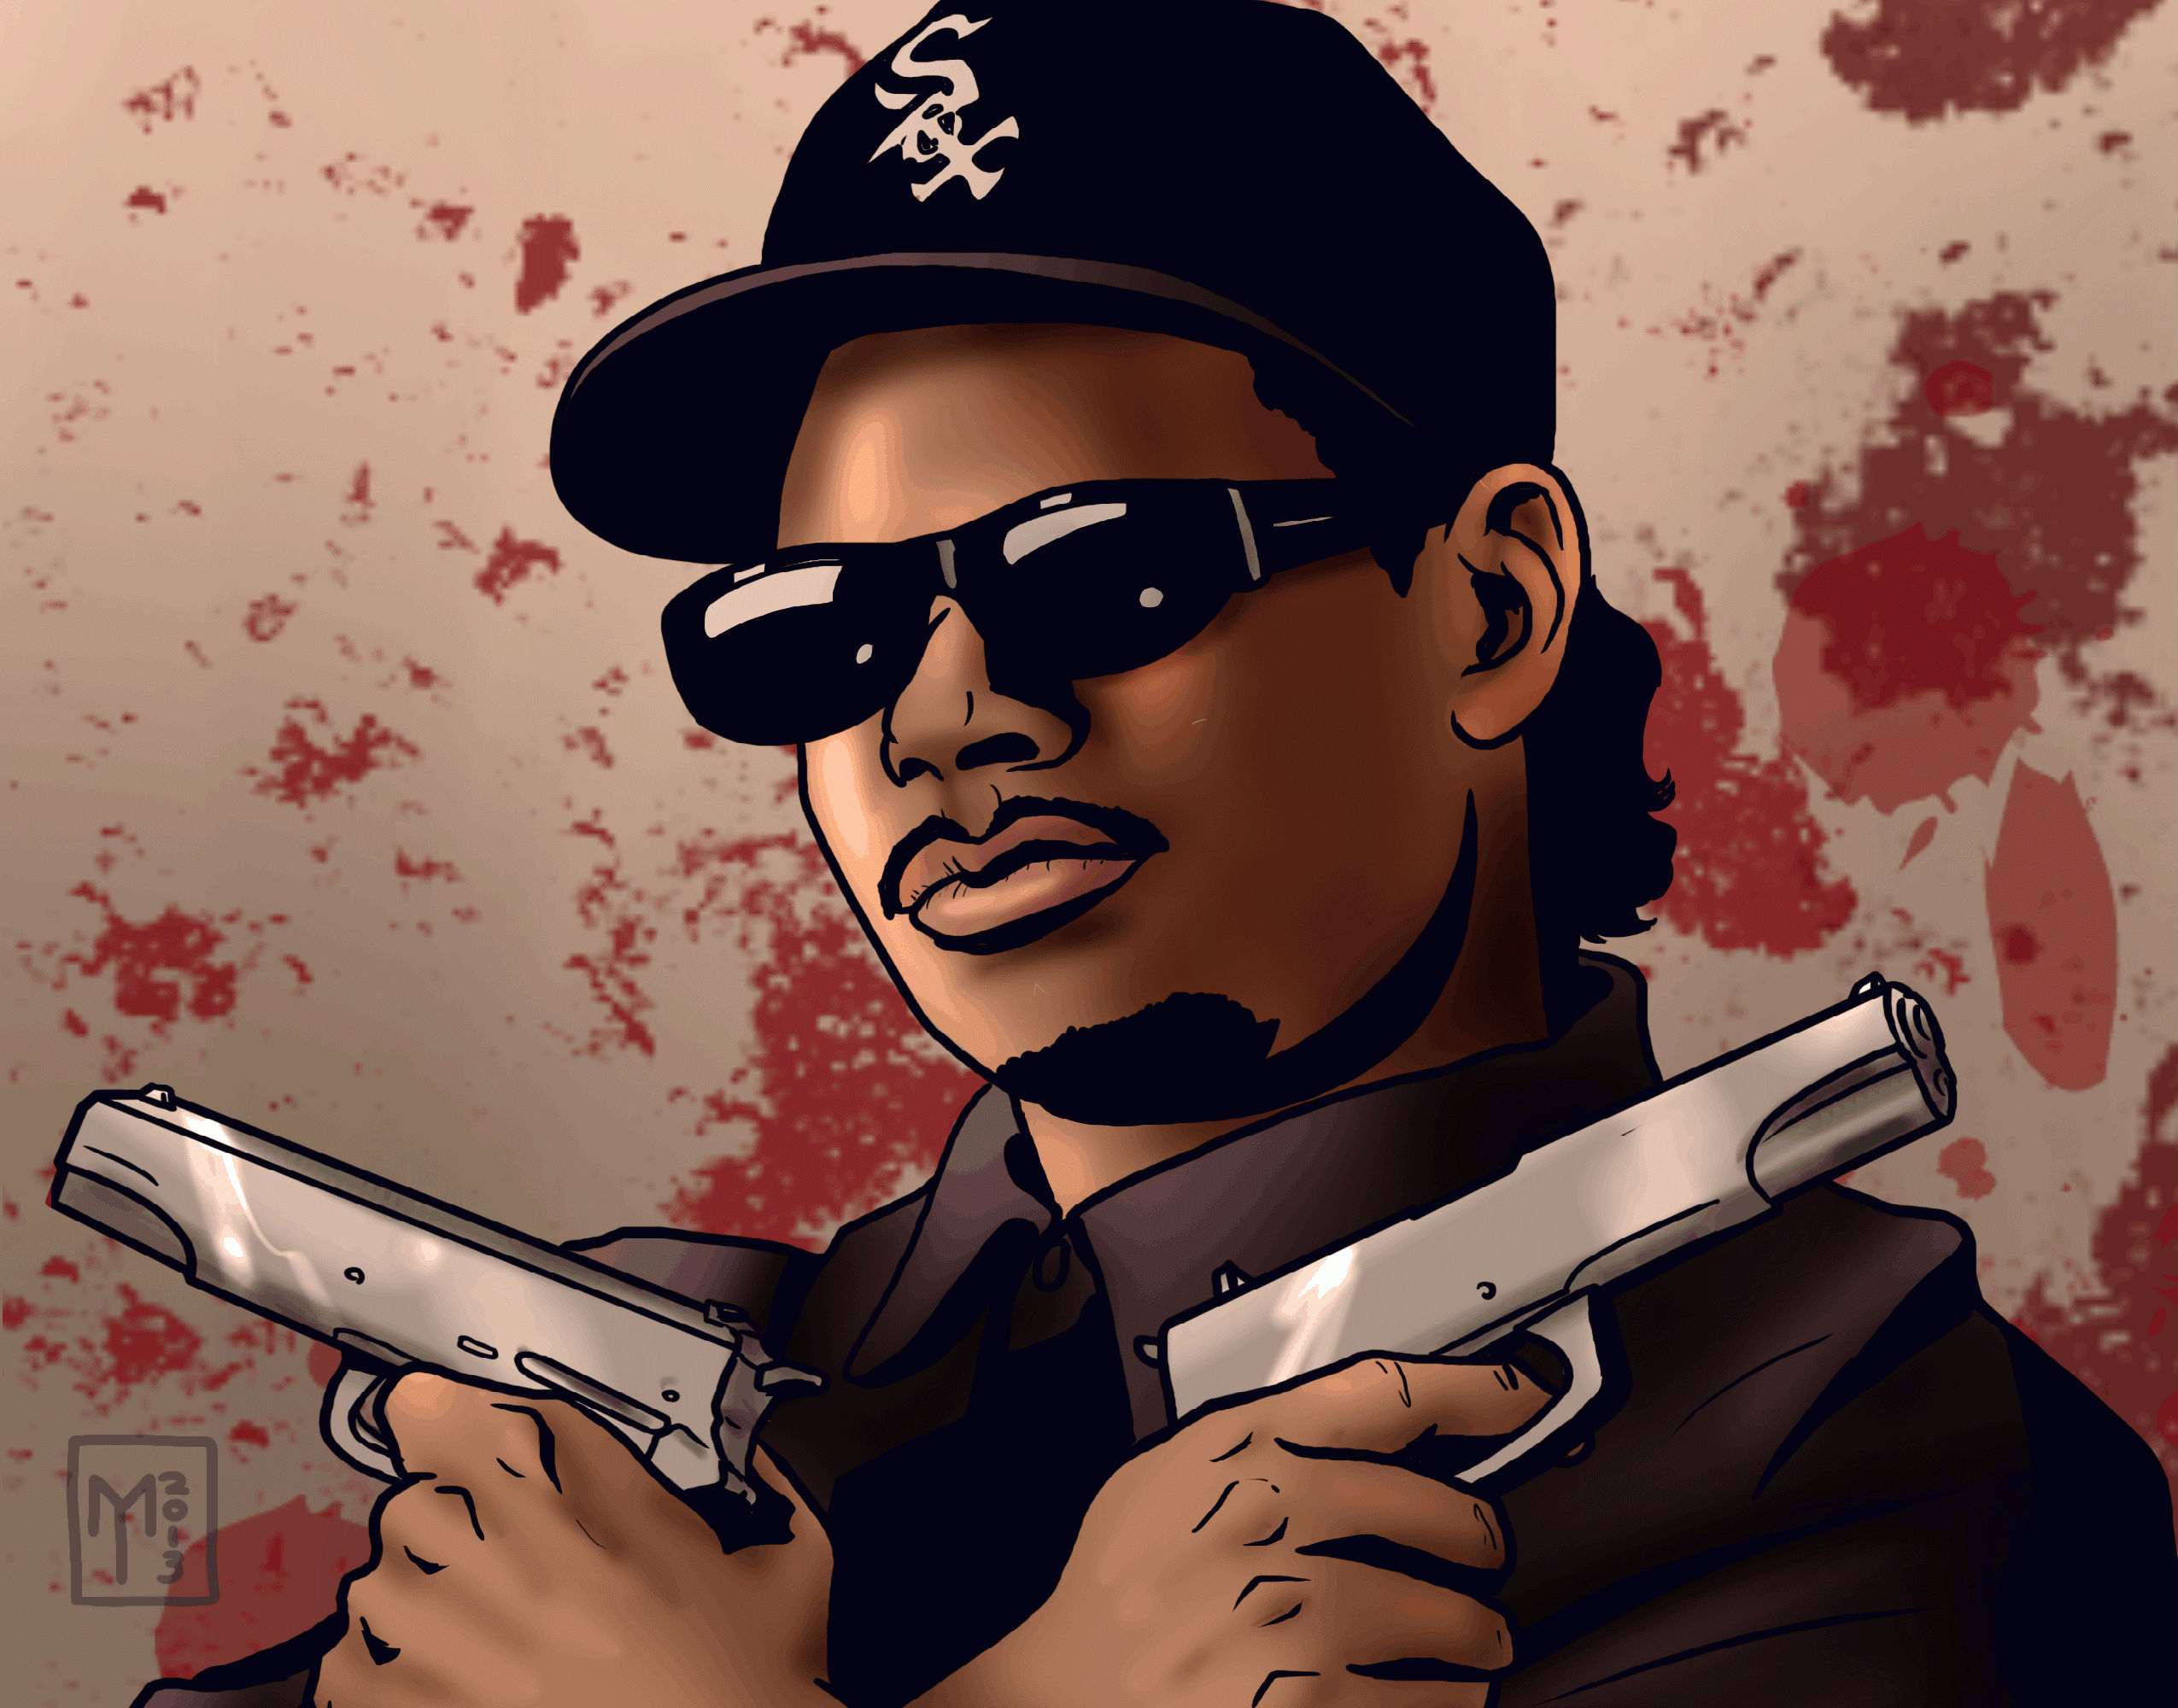 Free download Eazy E nwa gangsta rapper rap hip hop eazy e weapon gun d